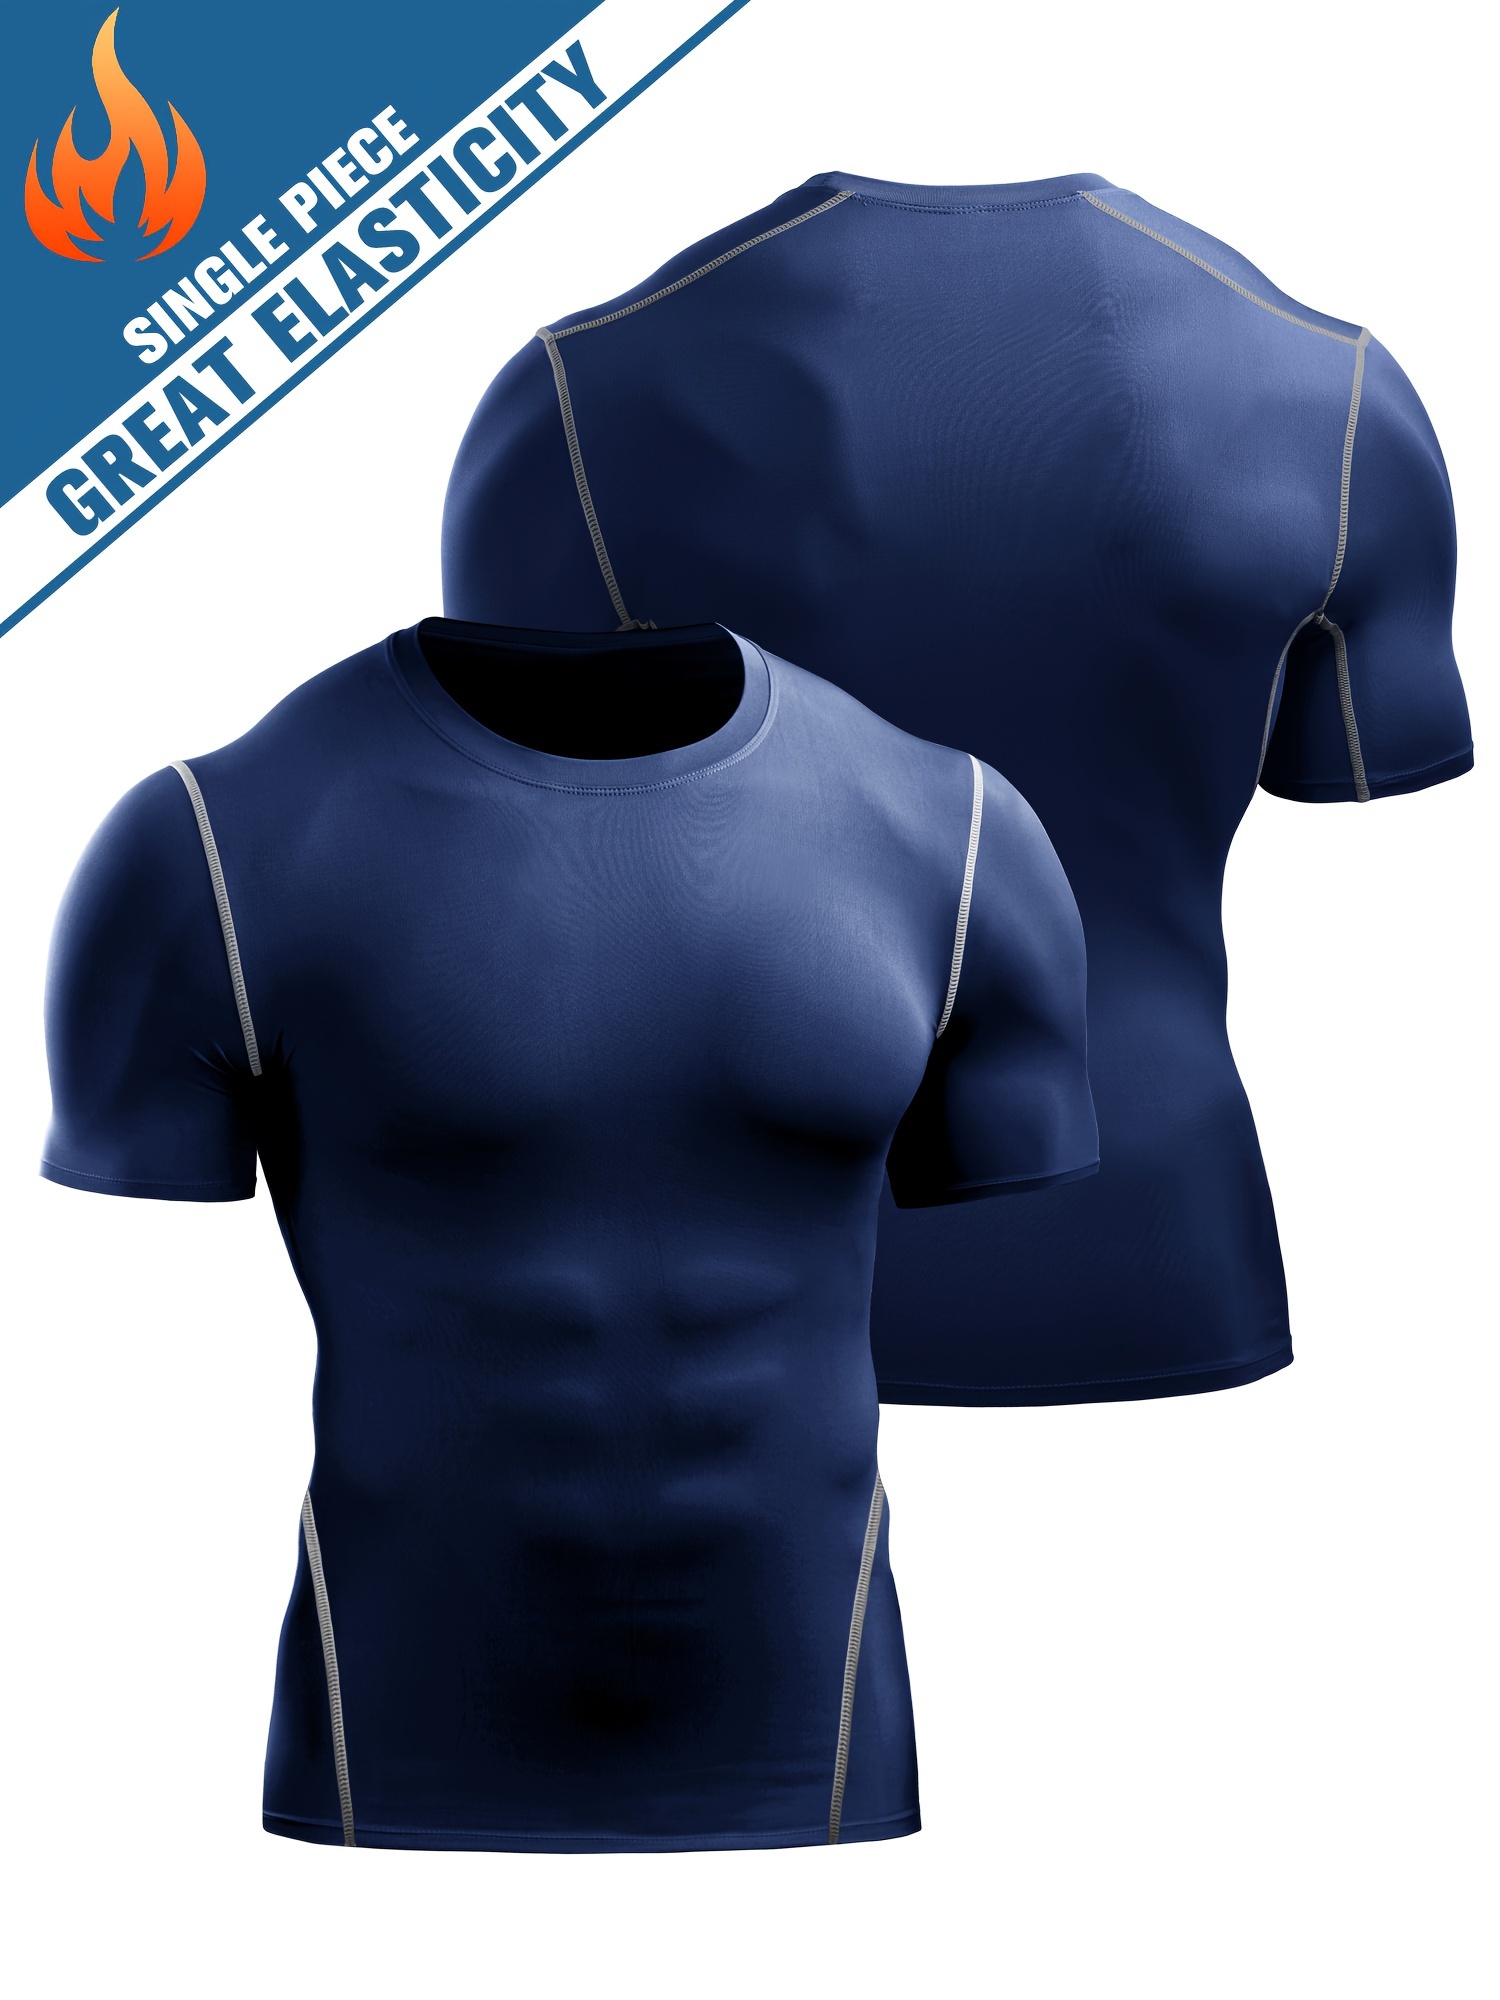 Jako Mens Sports Training Football Workout Short Tights Underwear Blue